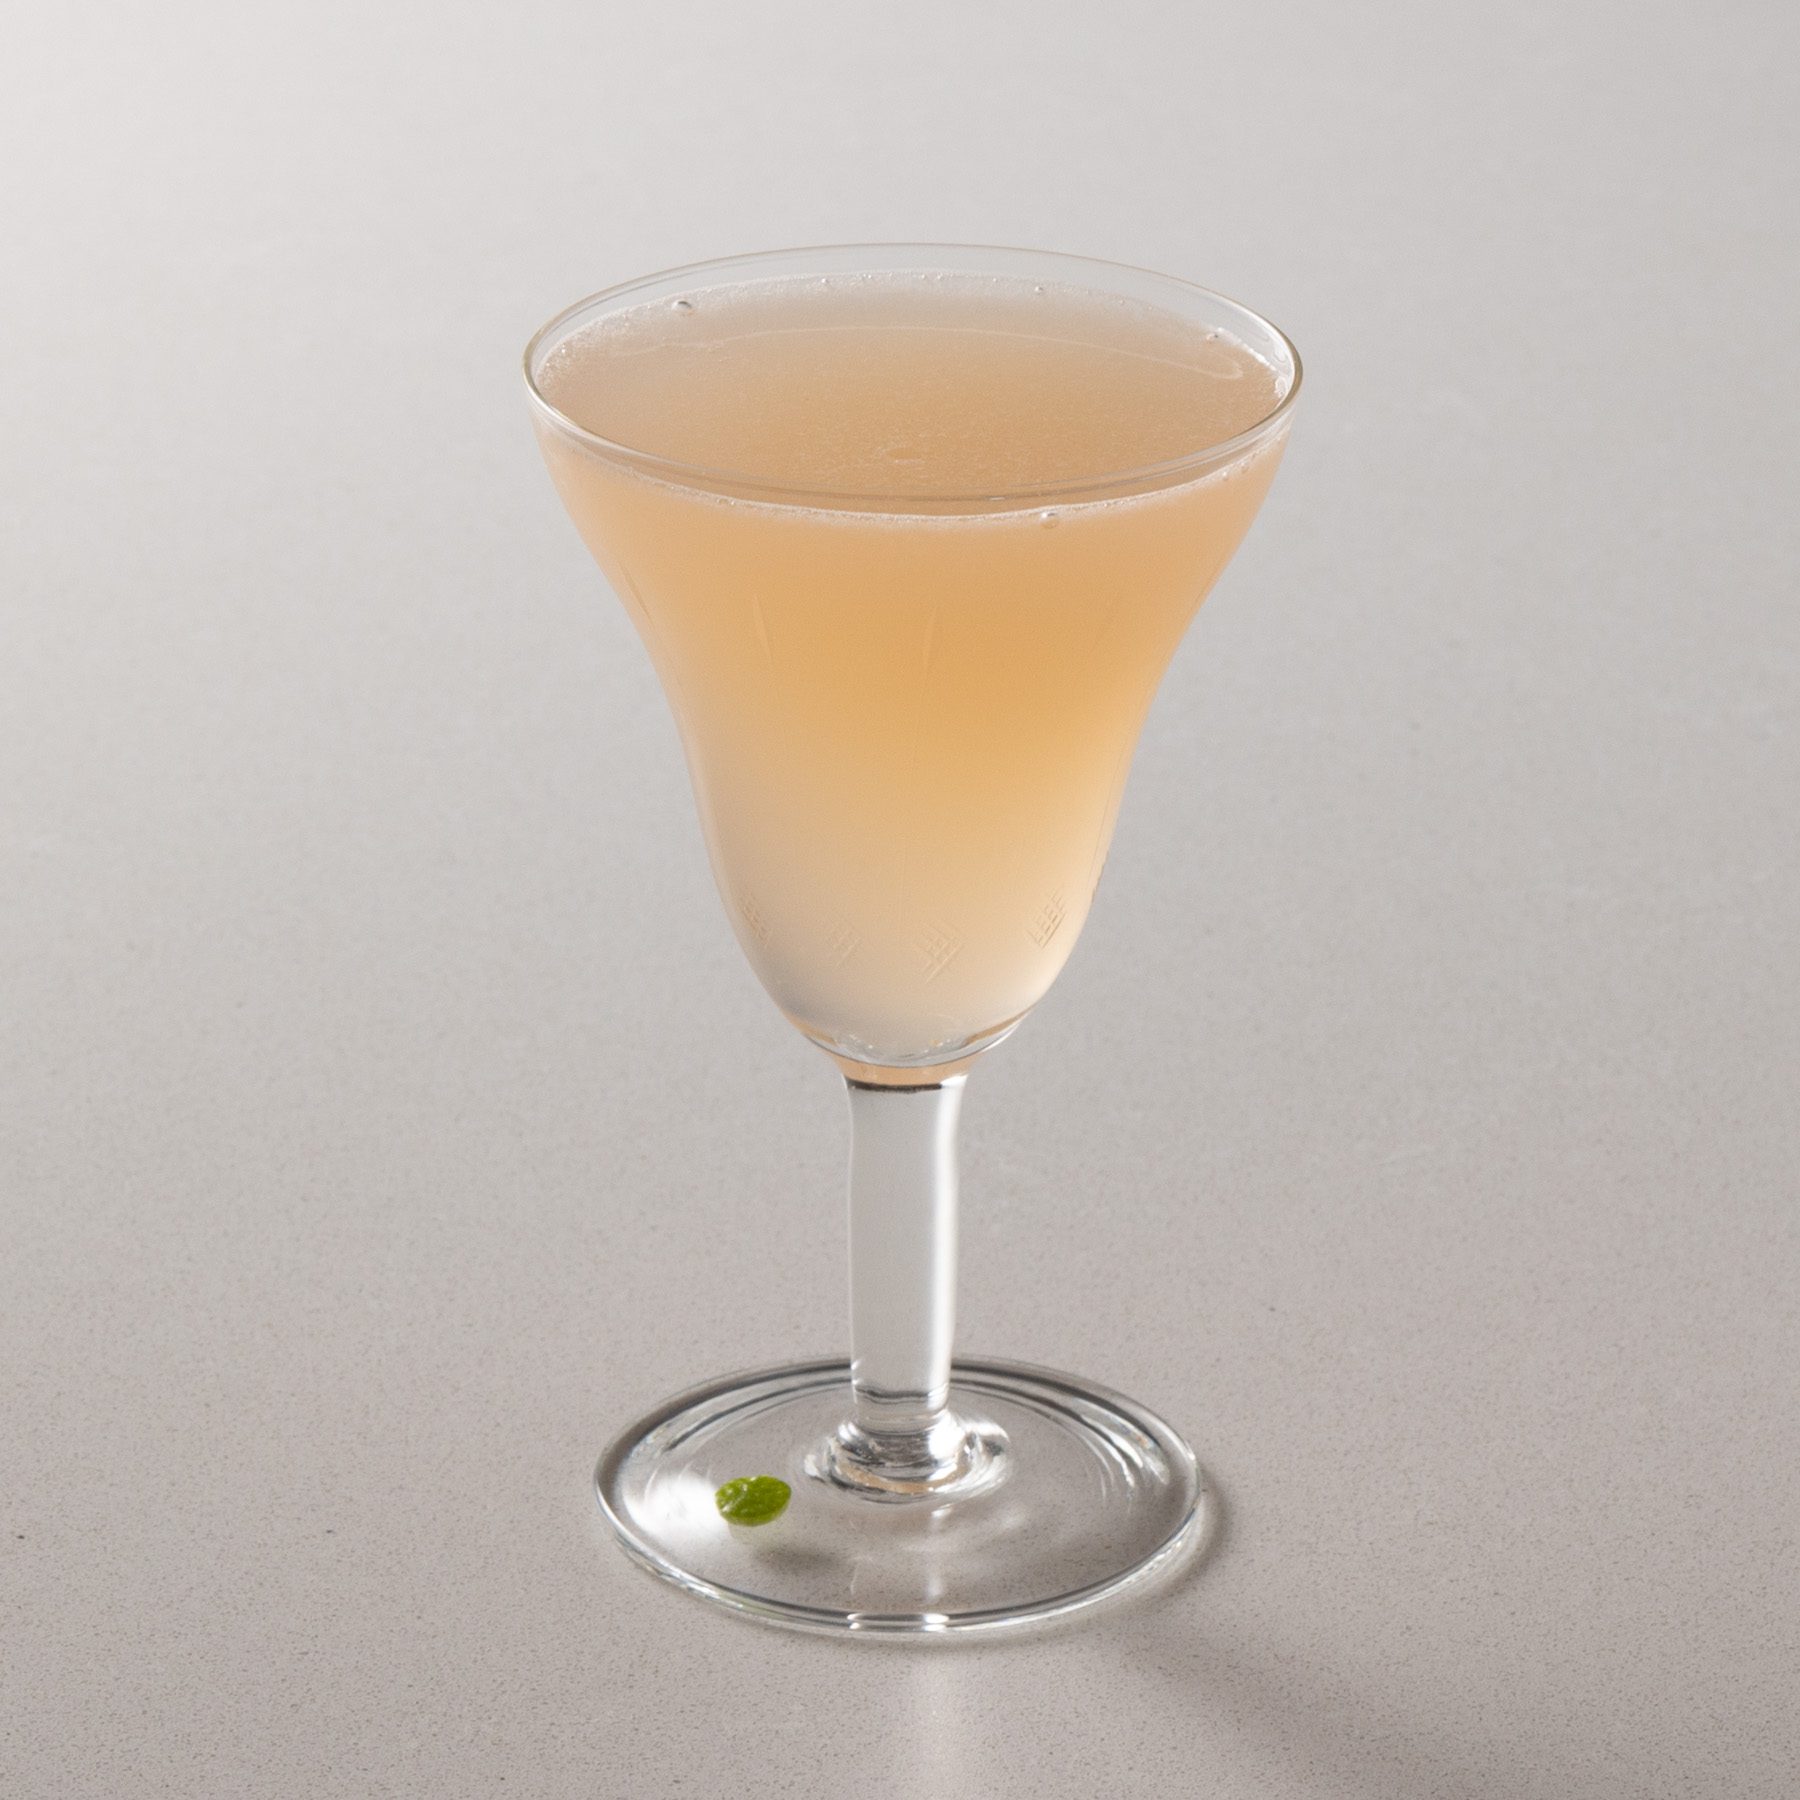 Pegu Club cocktail